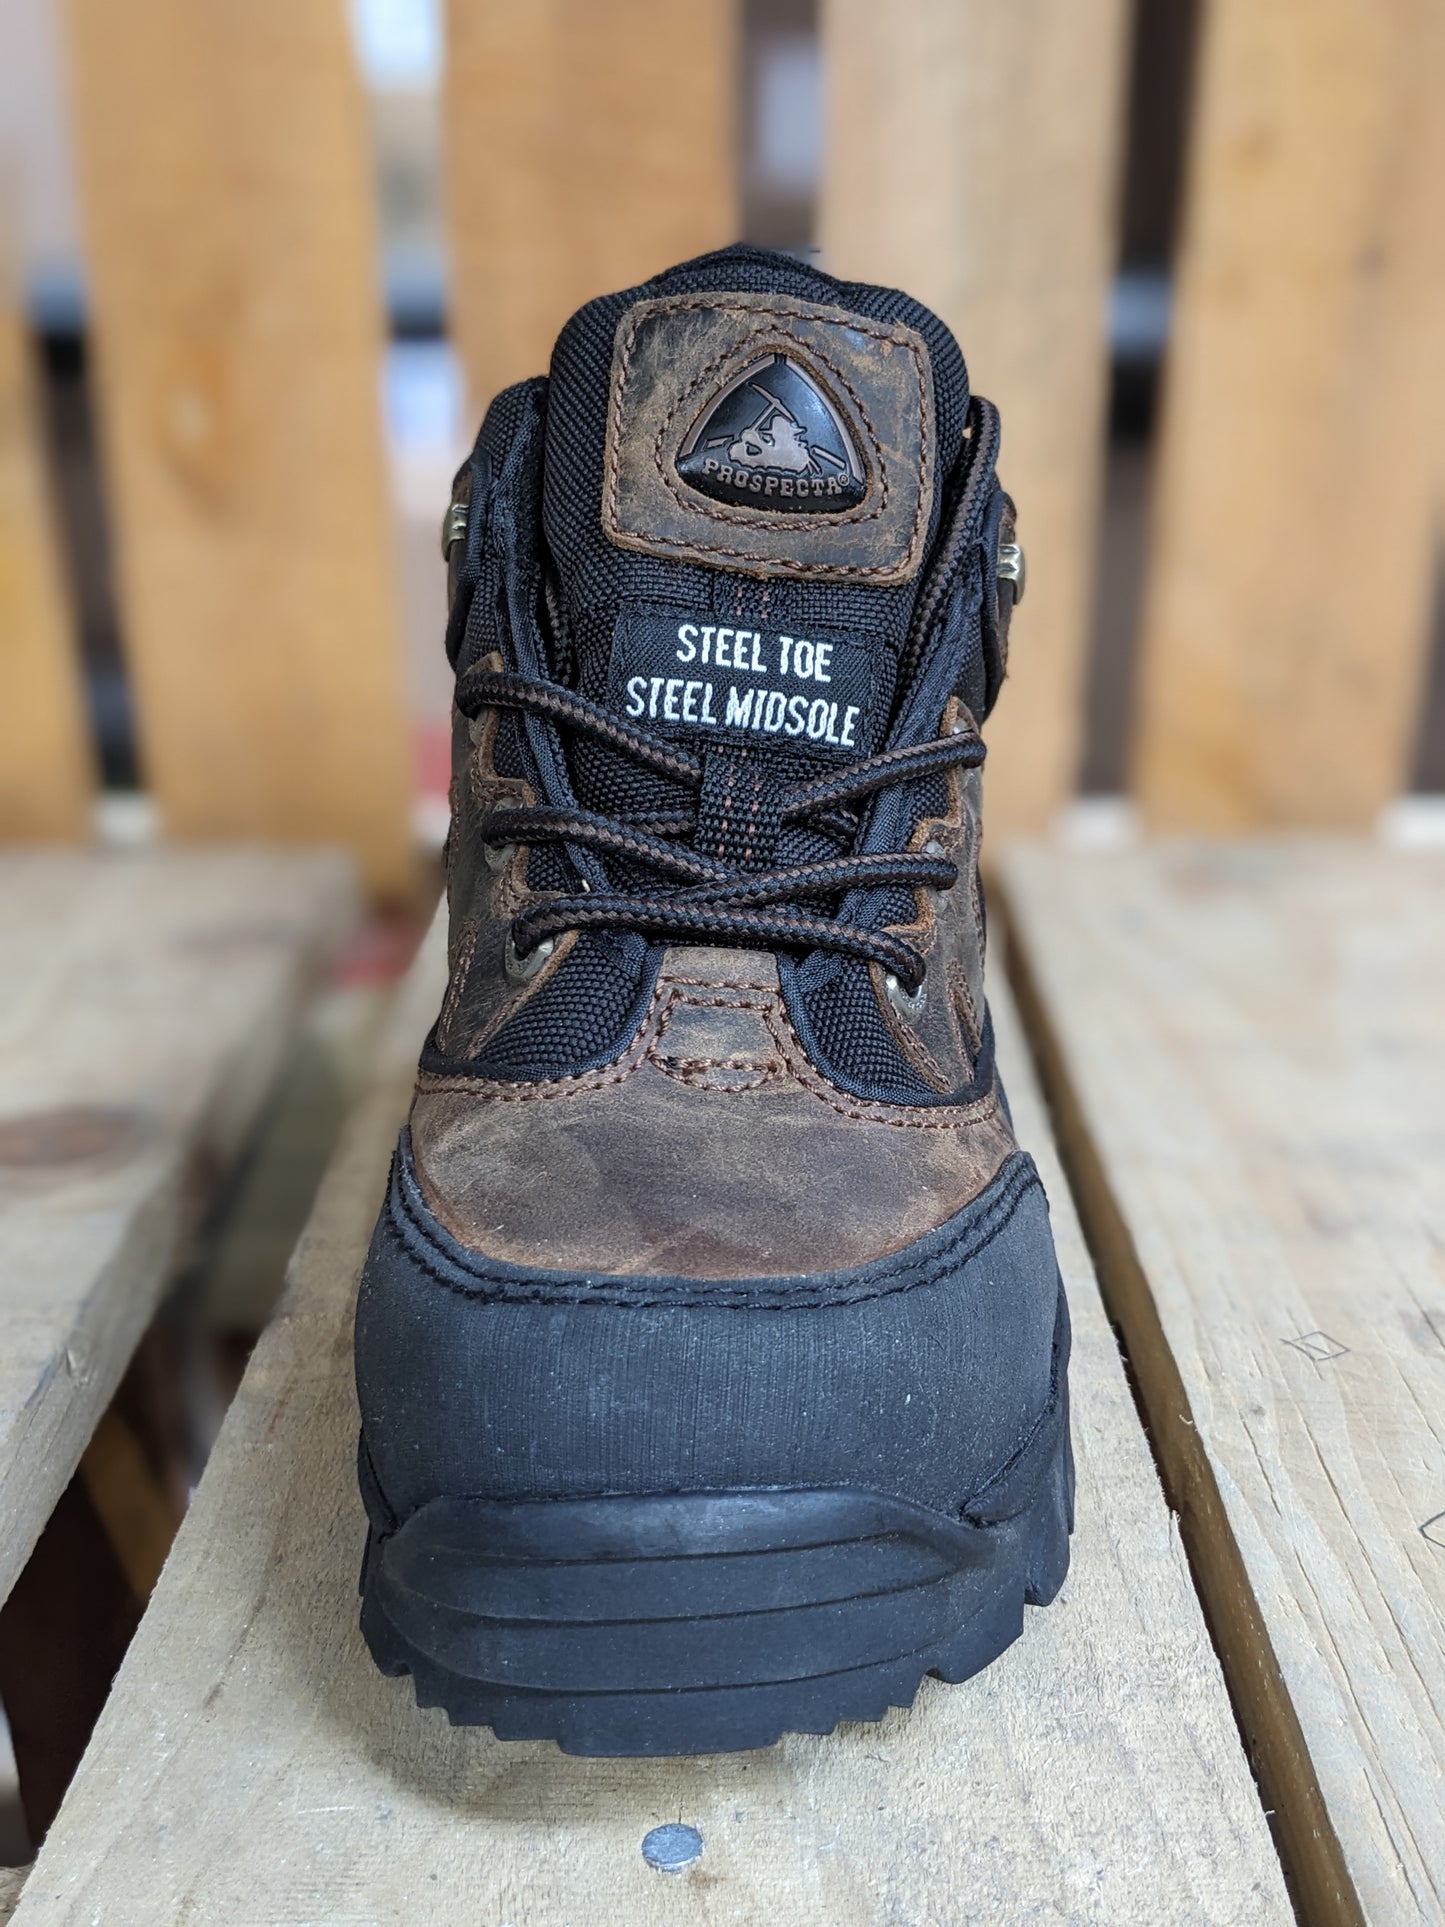 Prospecta Steel Toe Hiker Boot